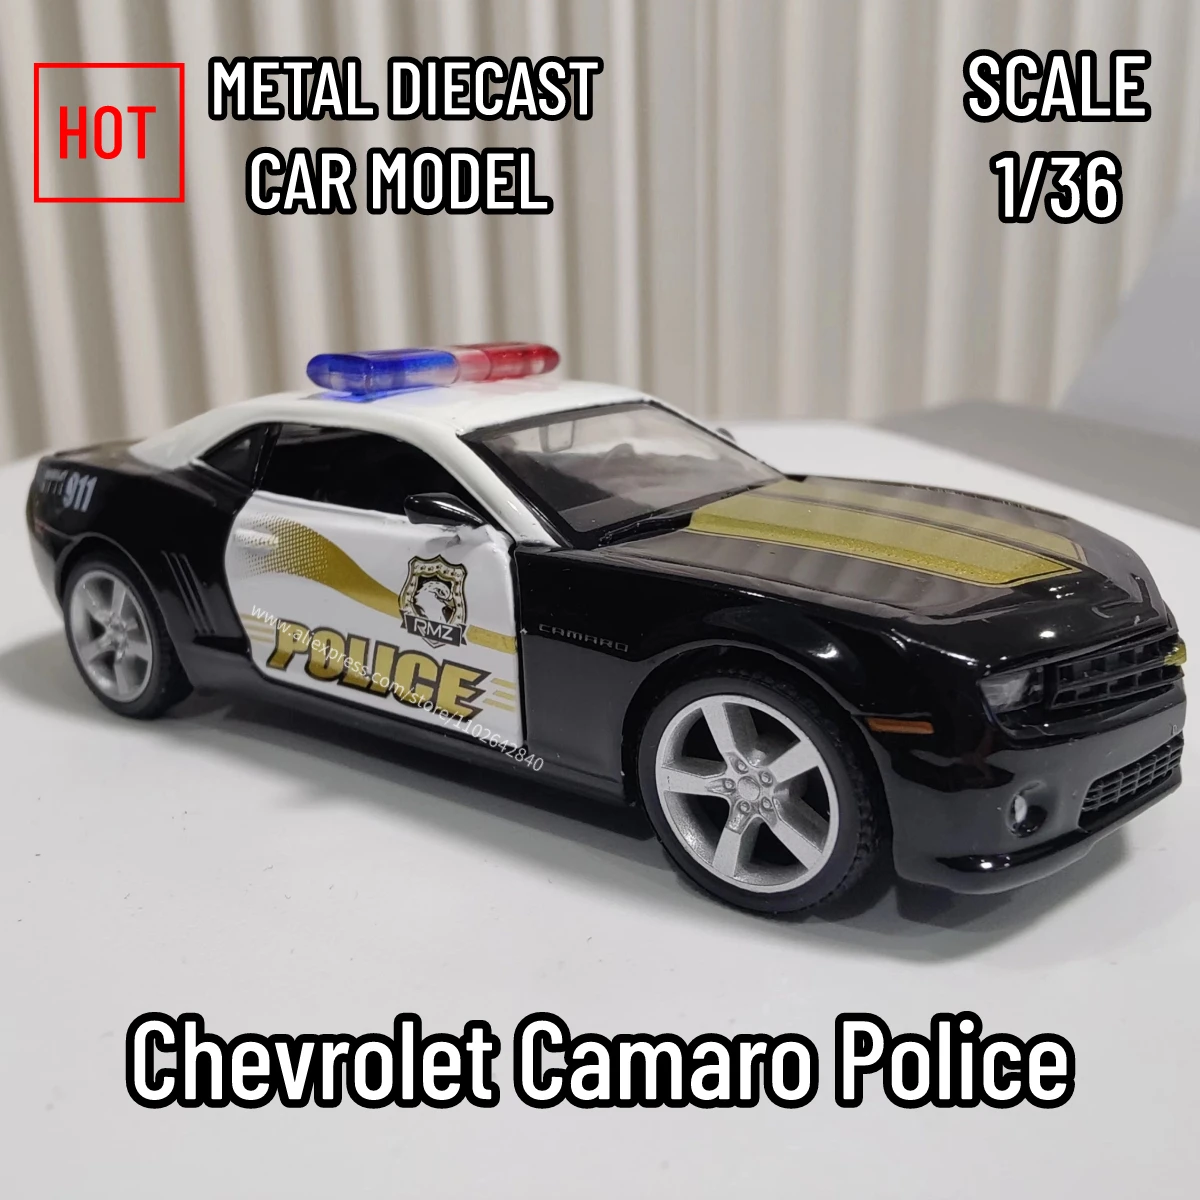 

1/36 Scale Car Model Chevrolet Camaro Police Replica Diecast Collection Vehicle Interior Decor Ornament Xmas Gift Kid Boy Toy